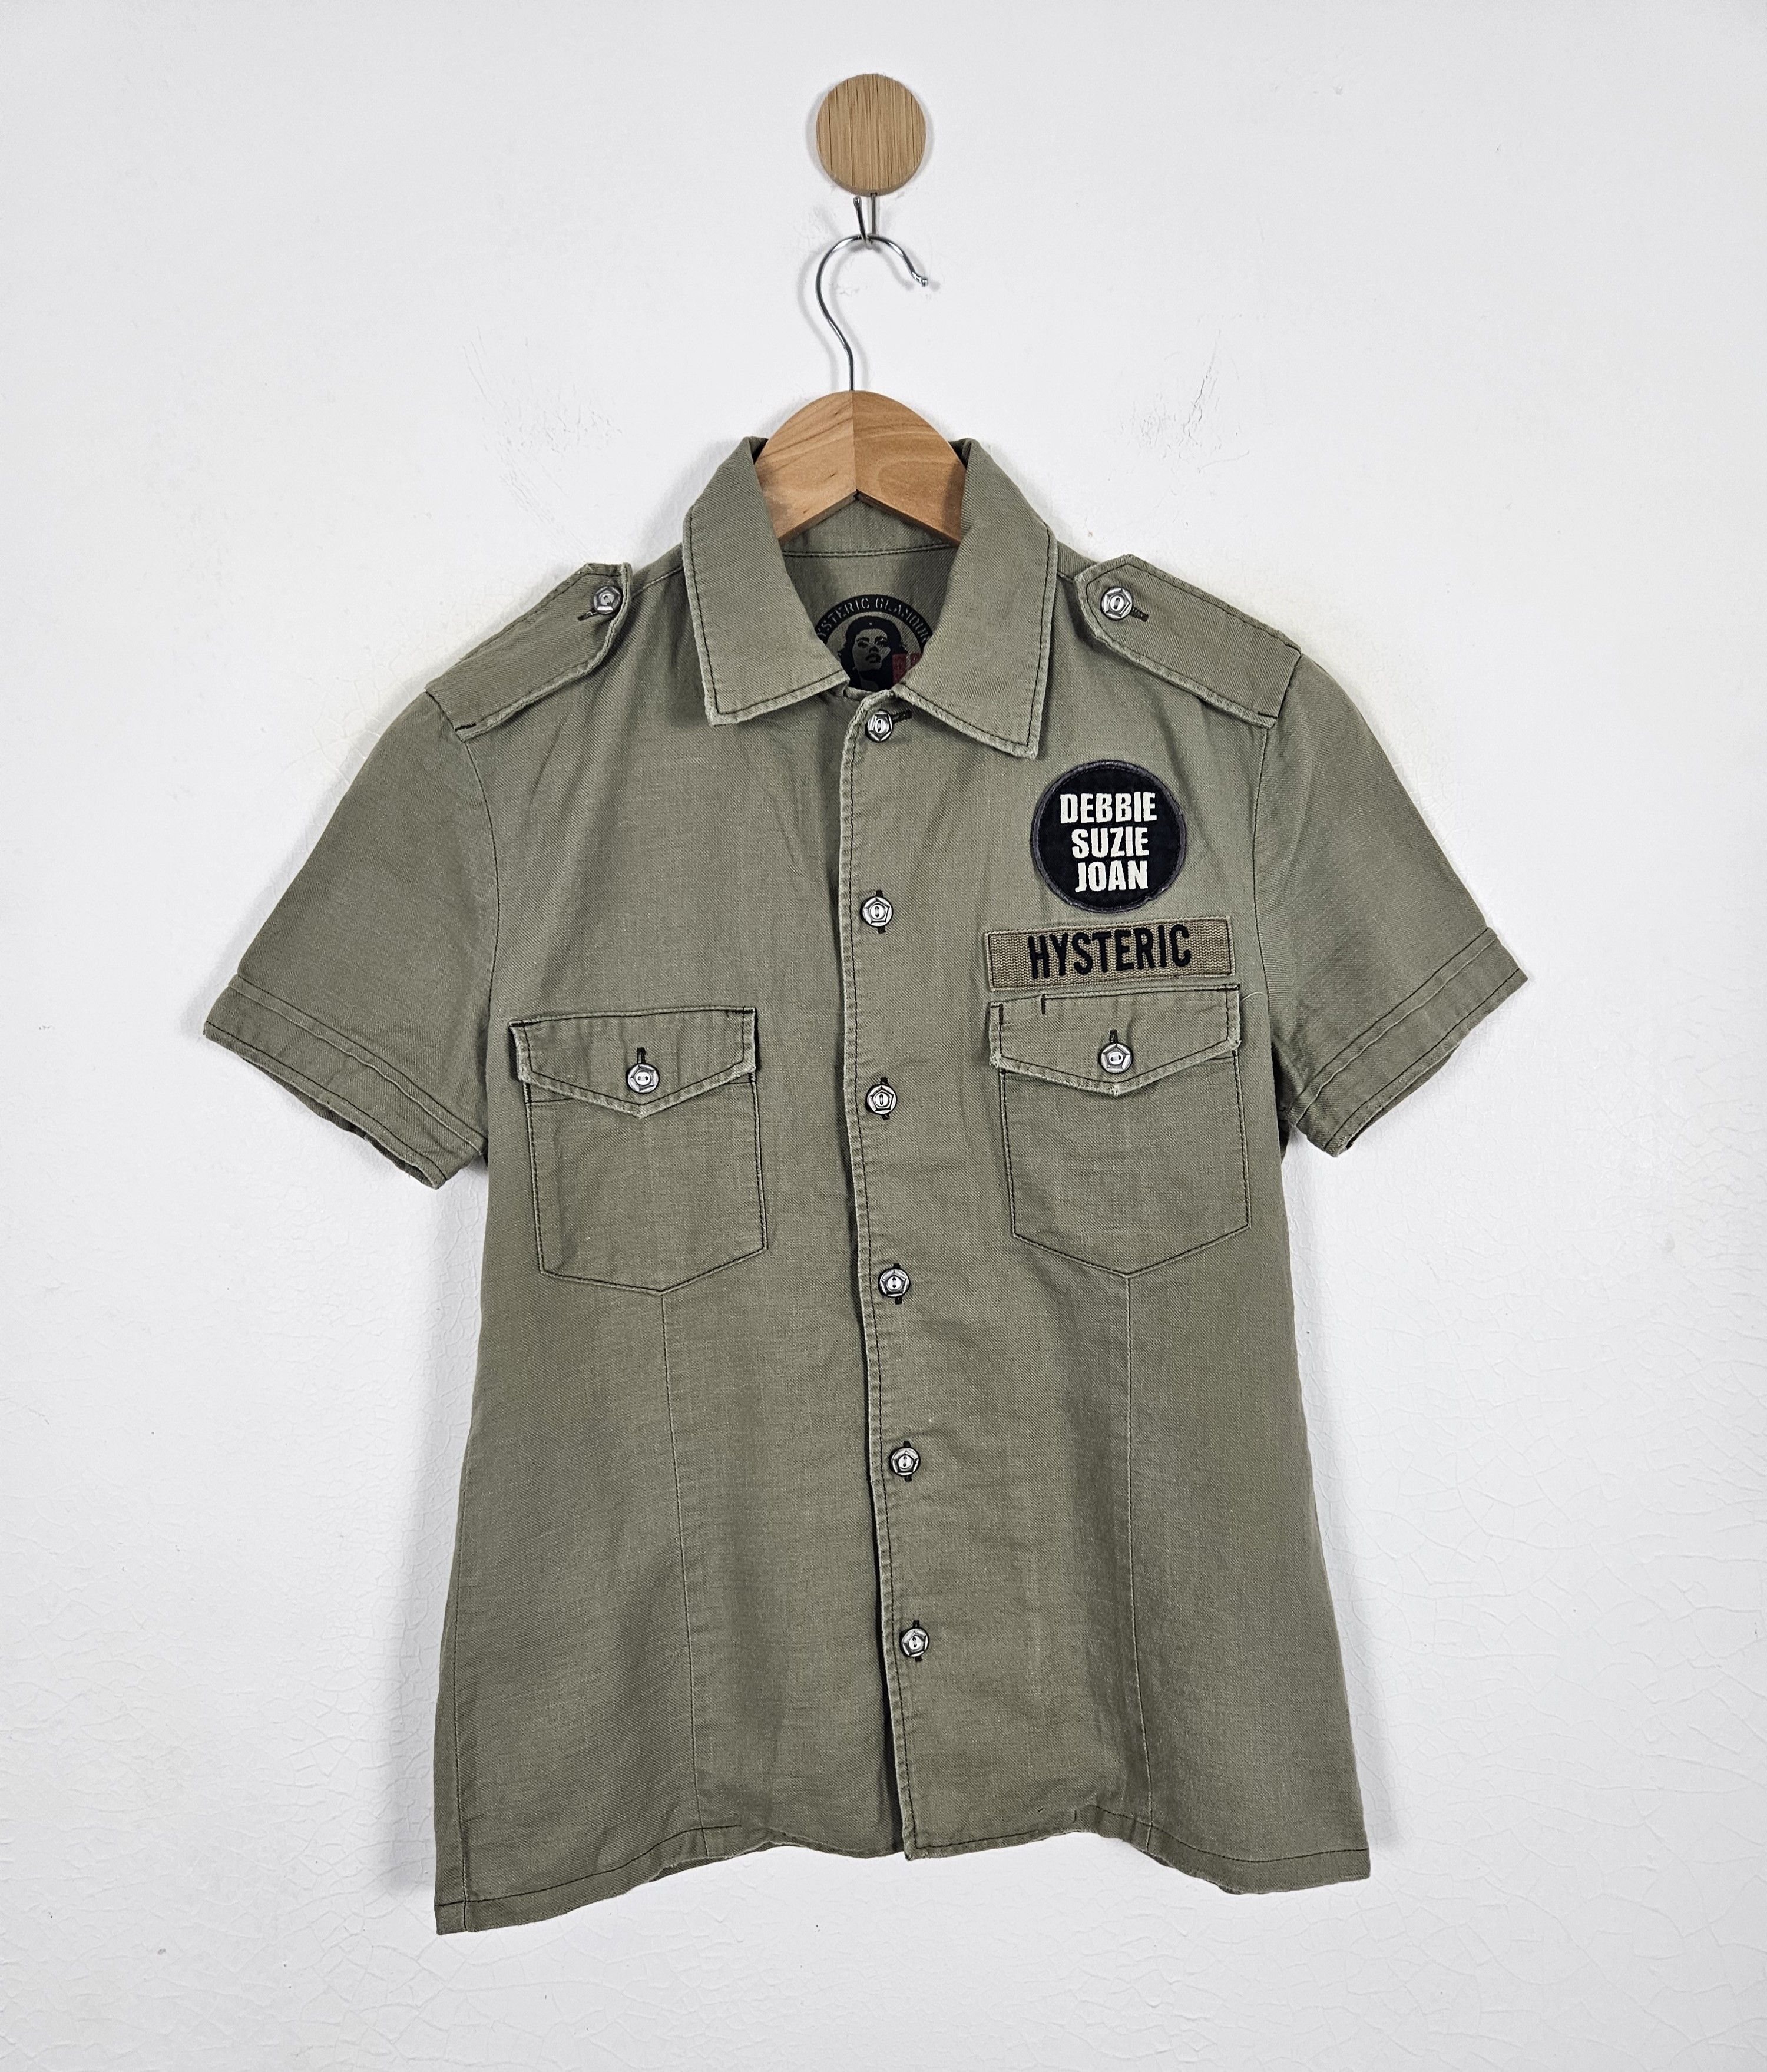 Hysteric Glamour Army Workwear Pocket shirt - 1